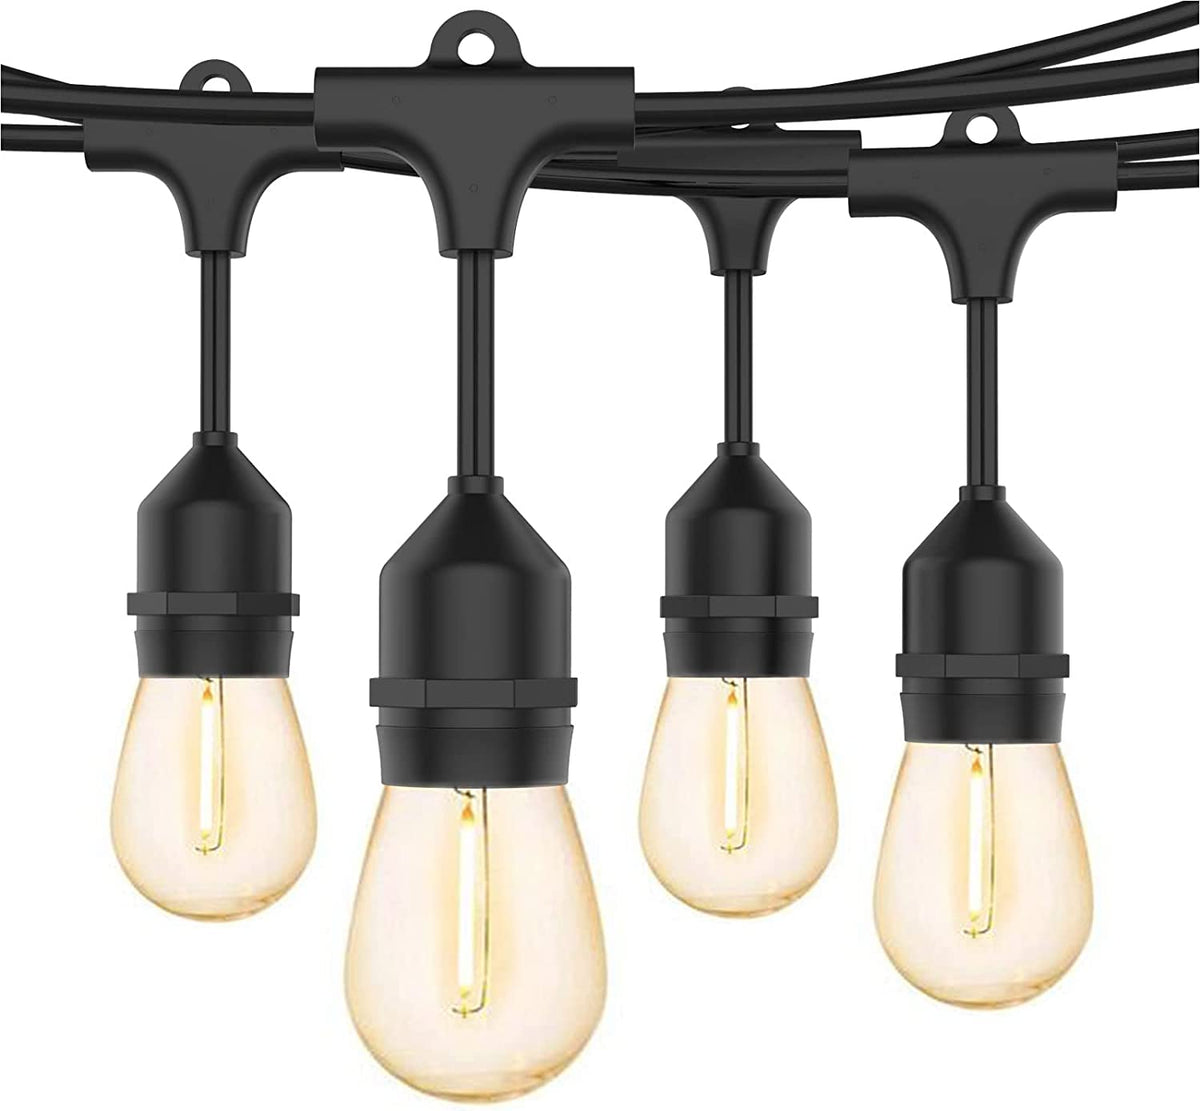 Outdoor Lights Mains Powered, 48FT LED S14 Garden Festoon Lighting with 15 LED Bulbs, Shatterproof Festoon Lights